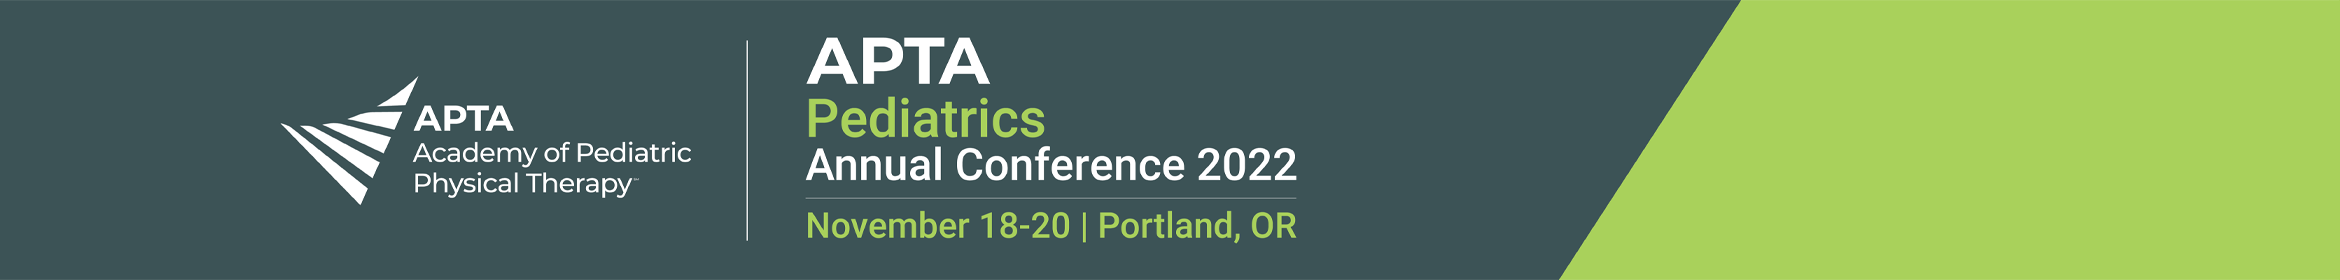 2022 APTA Pediatrics Annual Conference Main banner